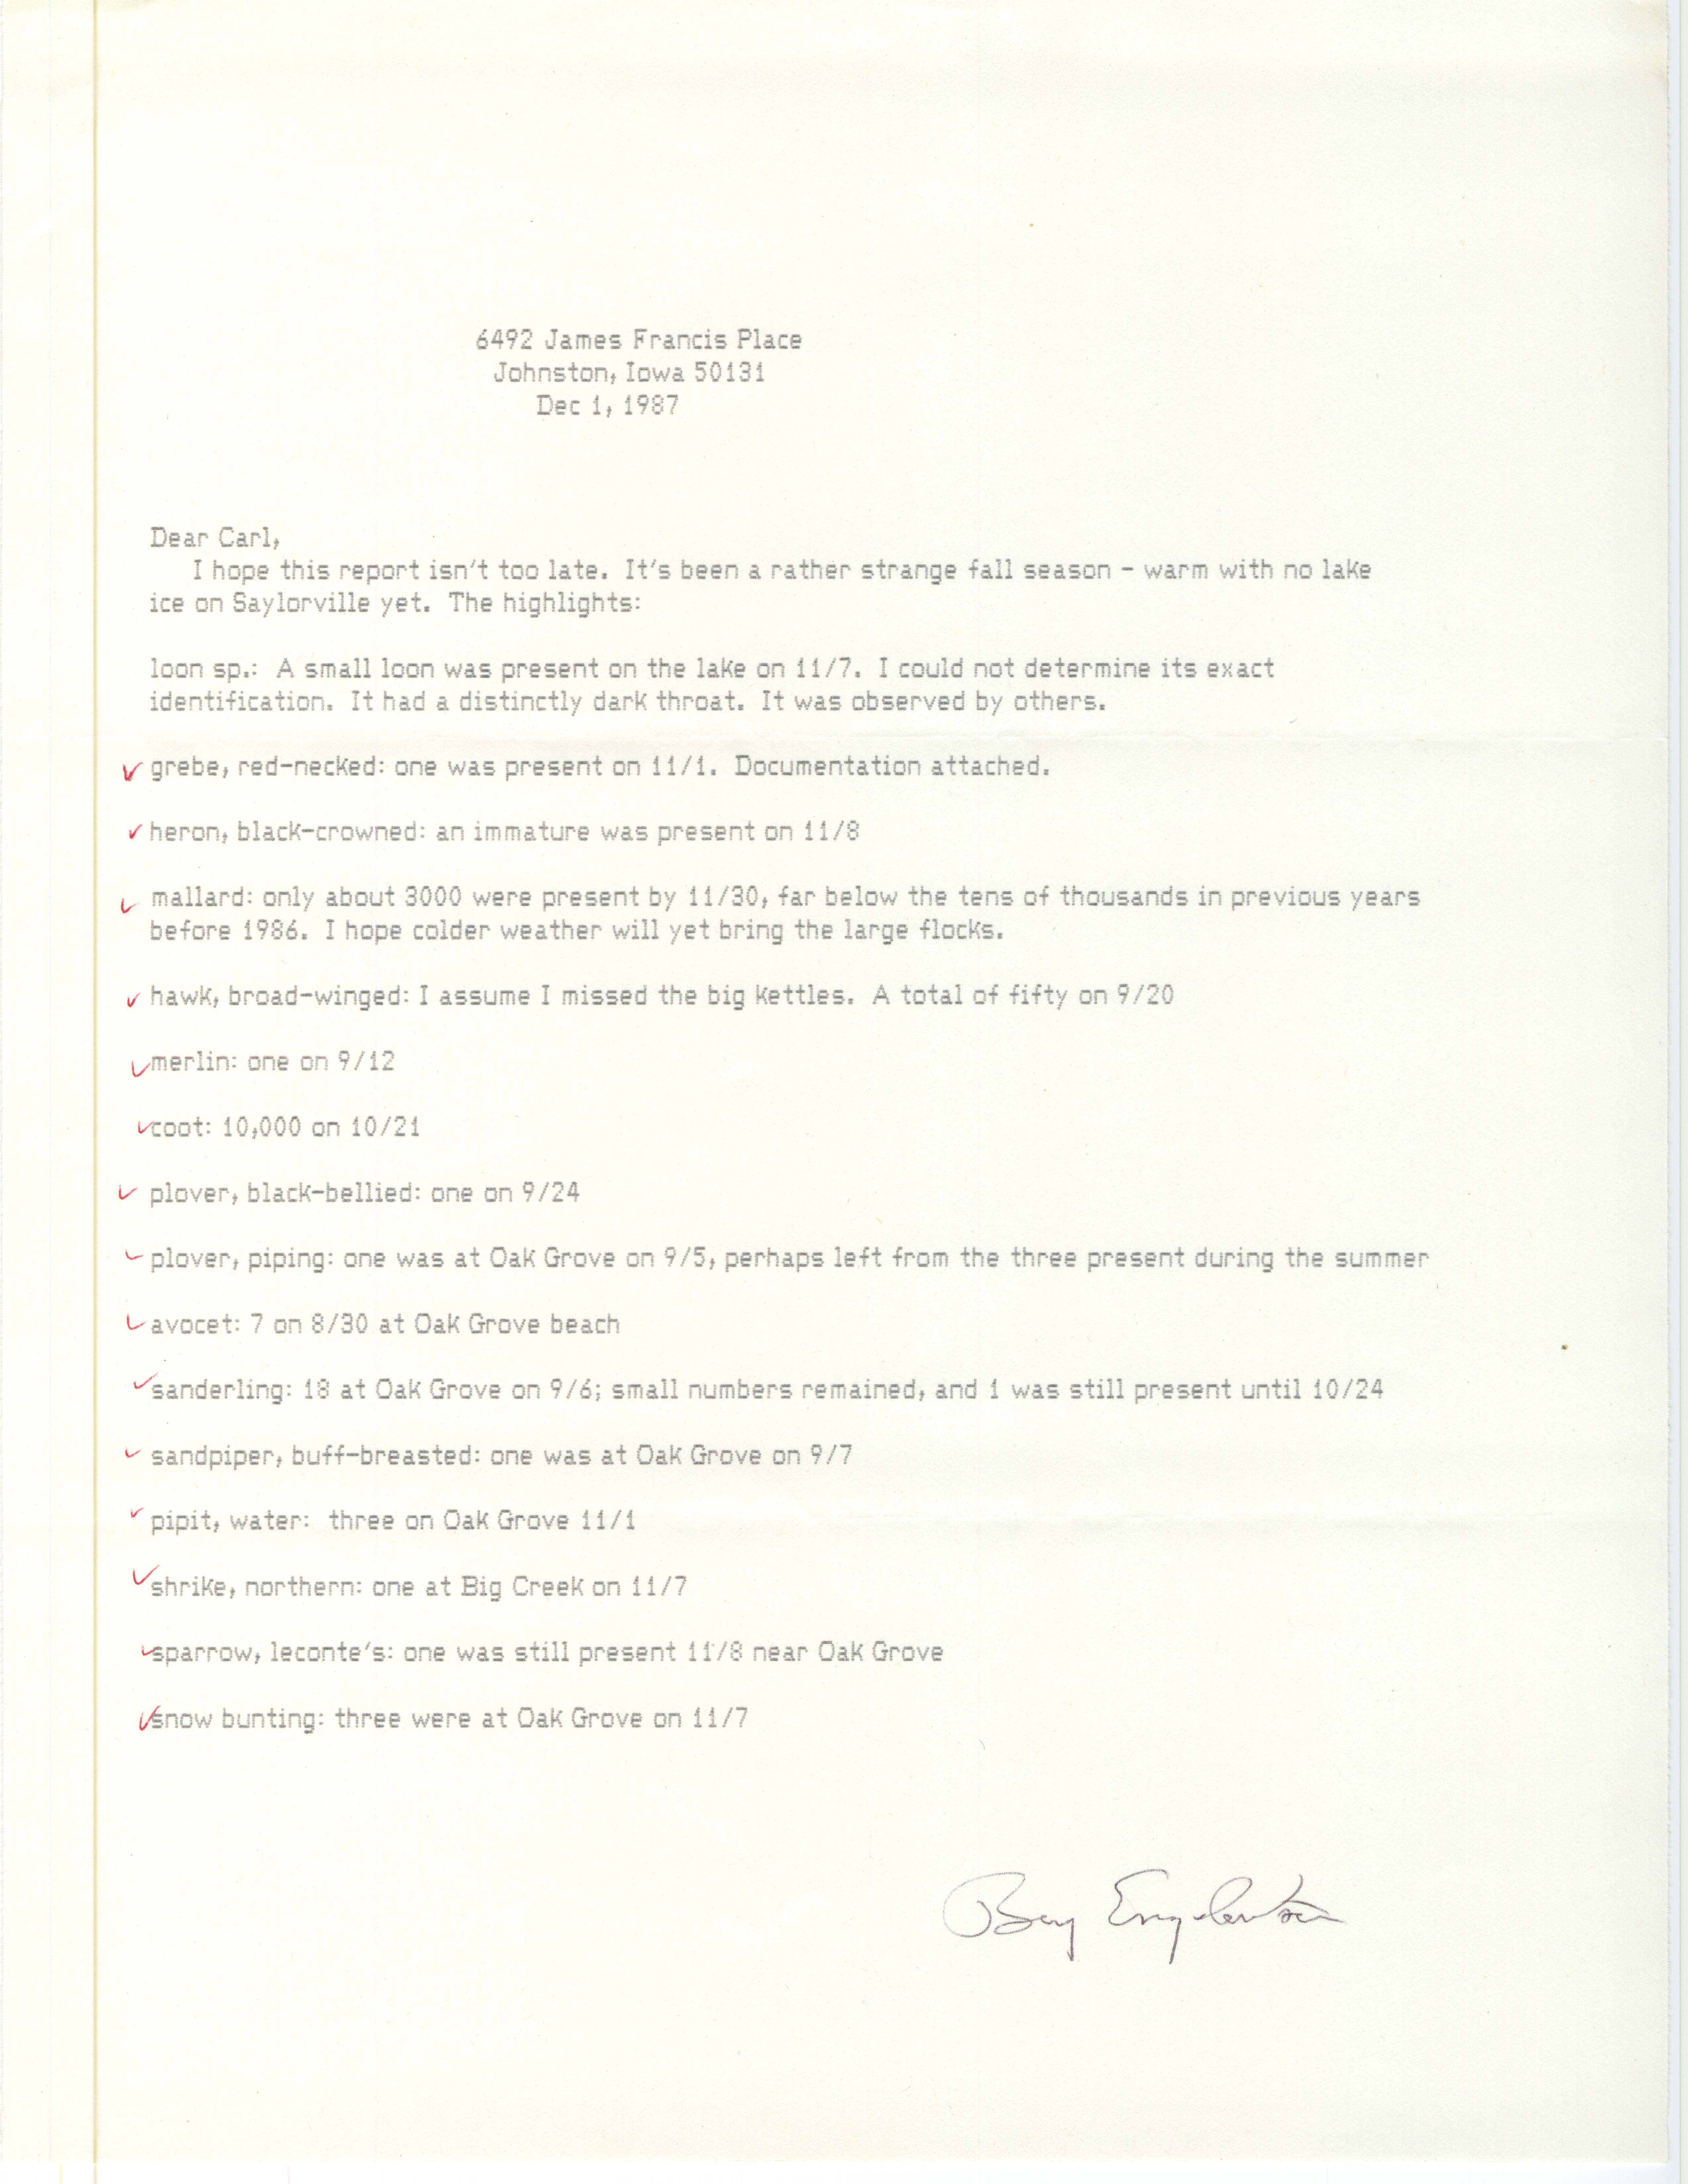 Bery Engebretsen letter to Carl J. Bendorf regarding fall bird sightings, December 1, 1987